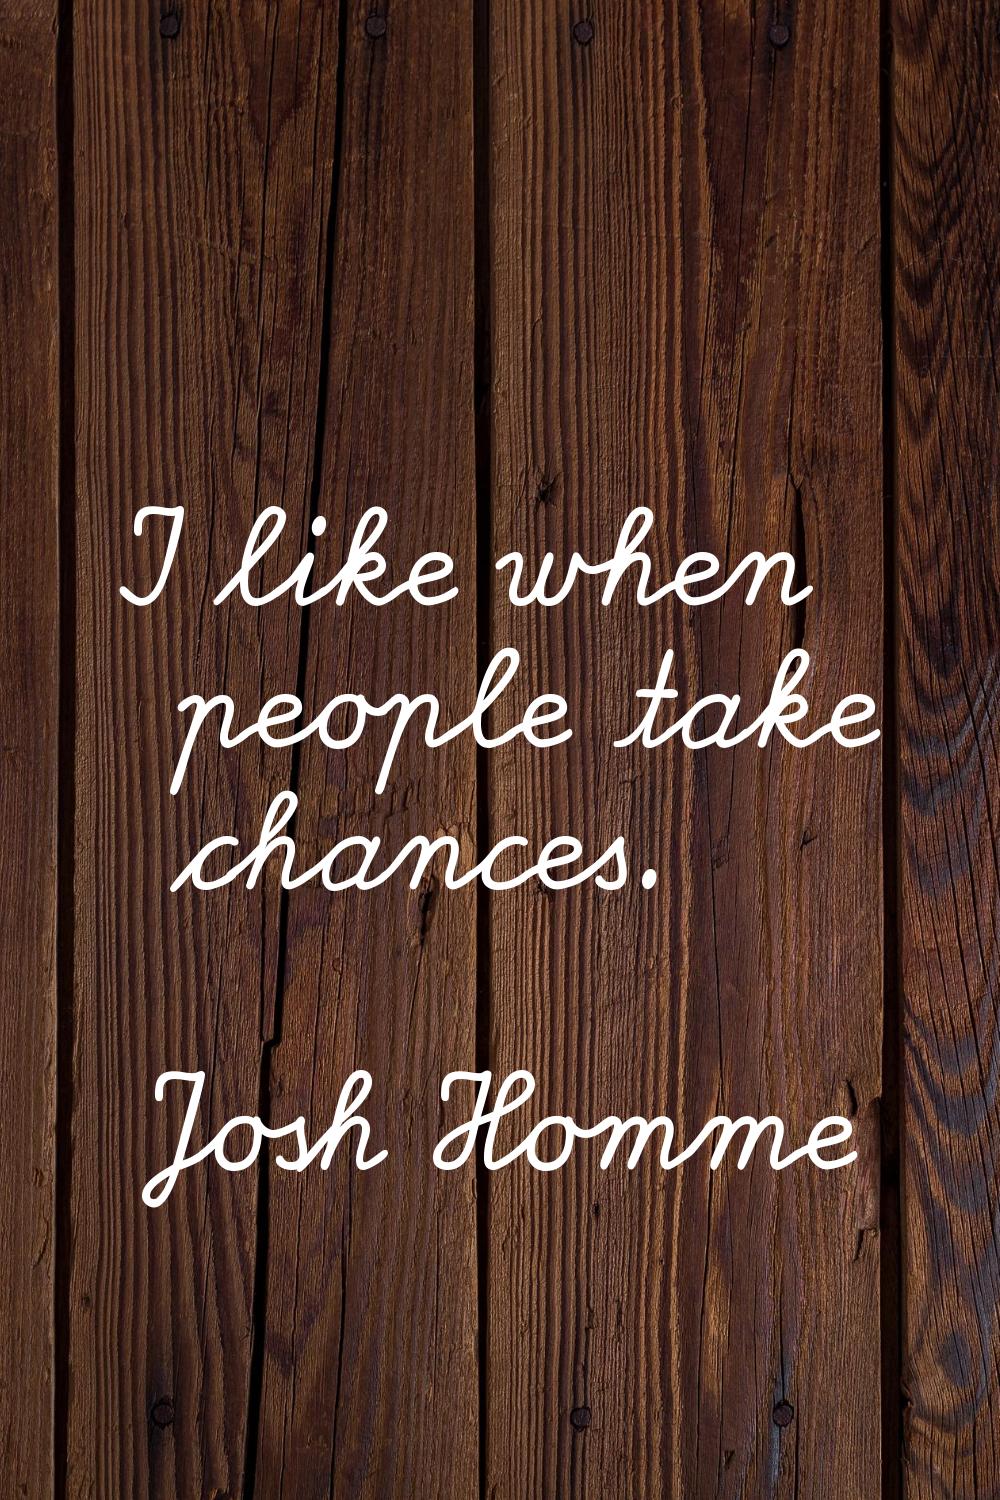 I like when people take chances.